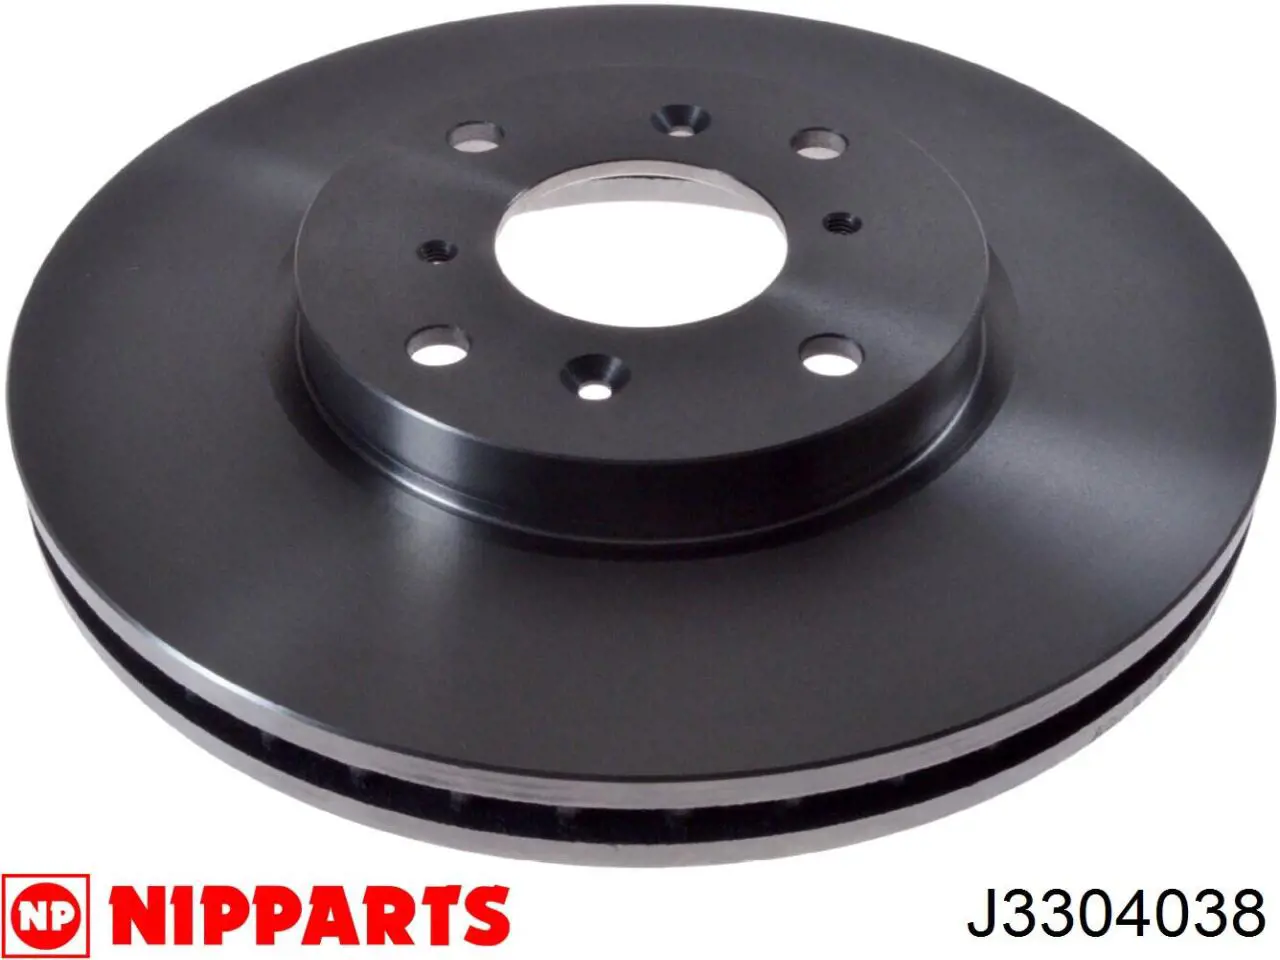 J3304038 Nipparts disco de freno delantero